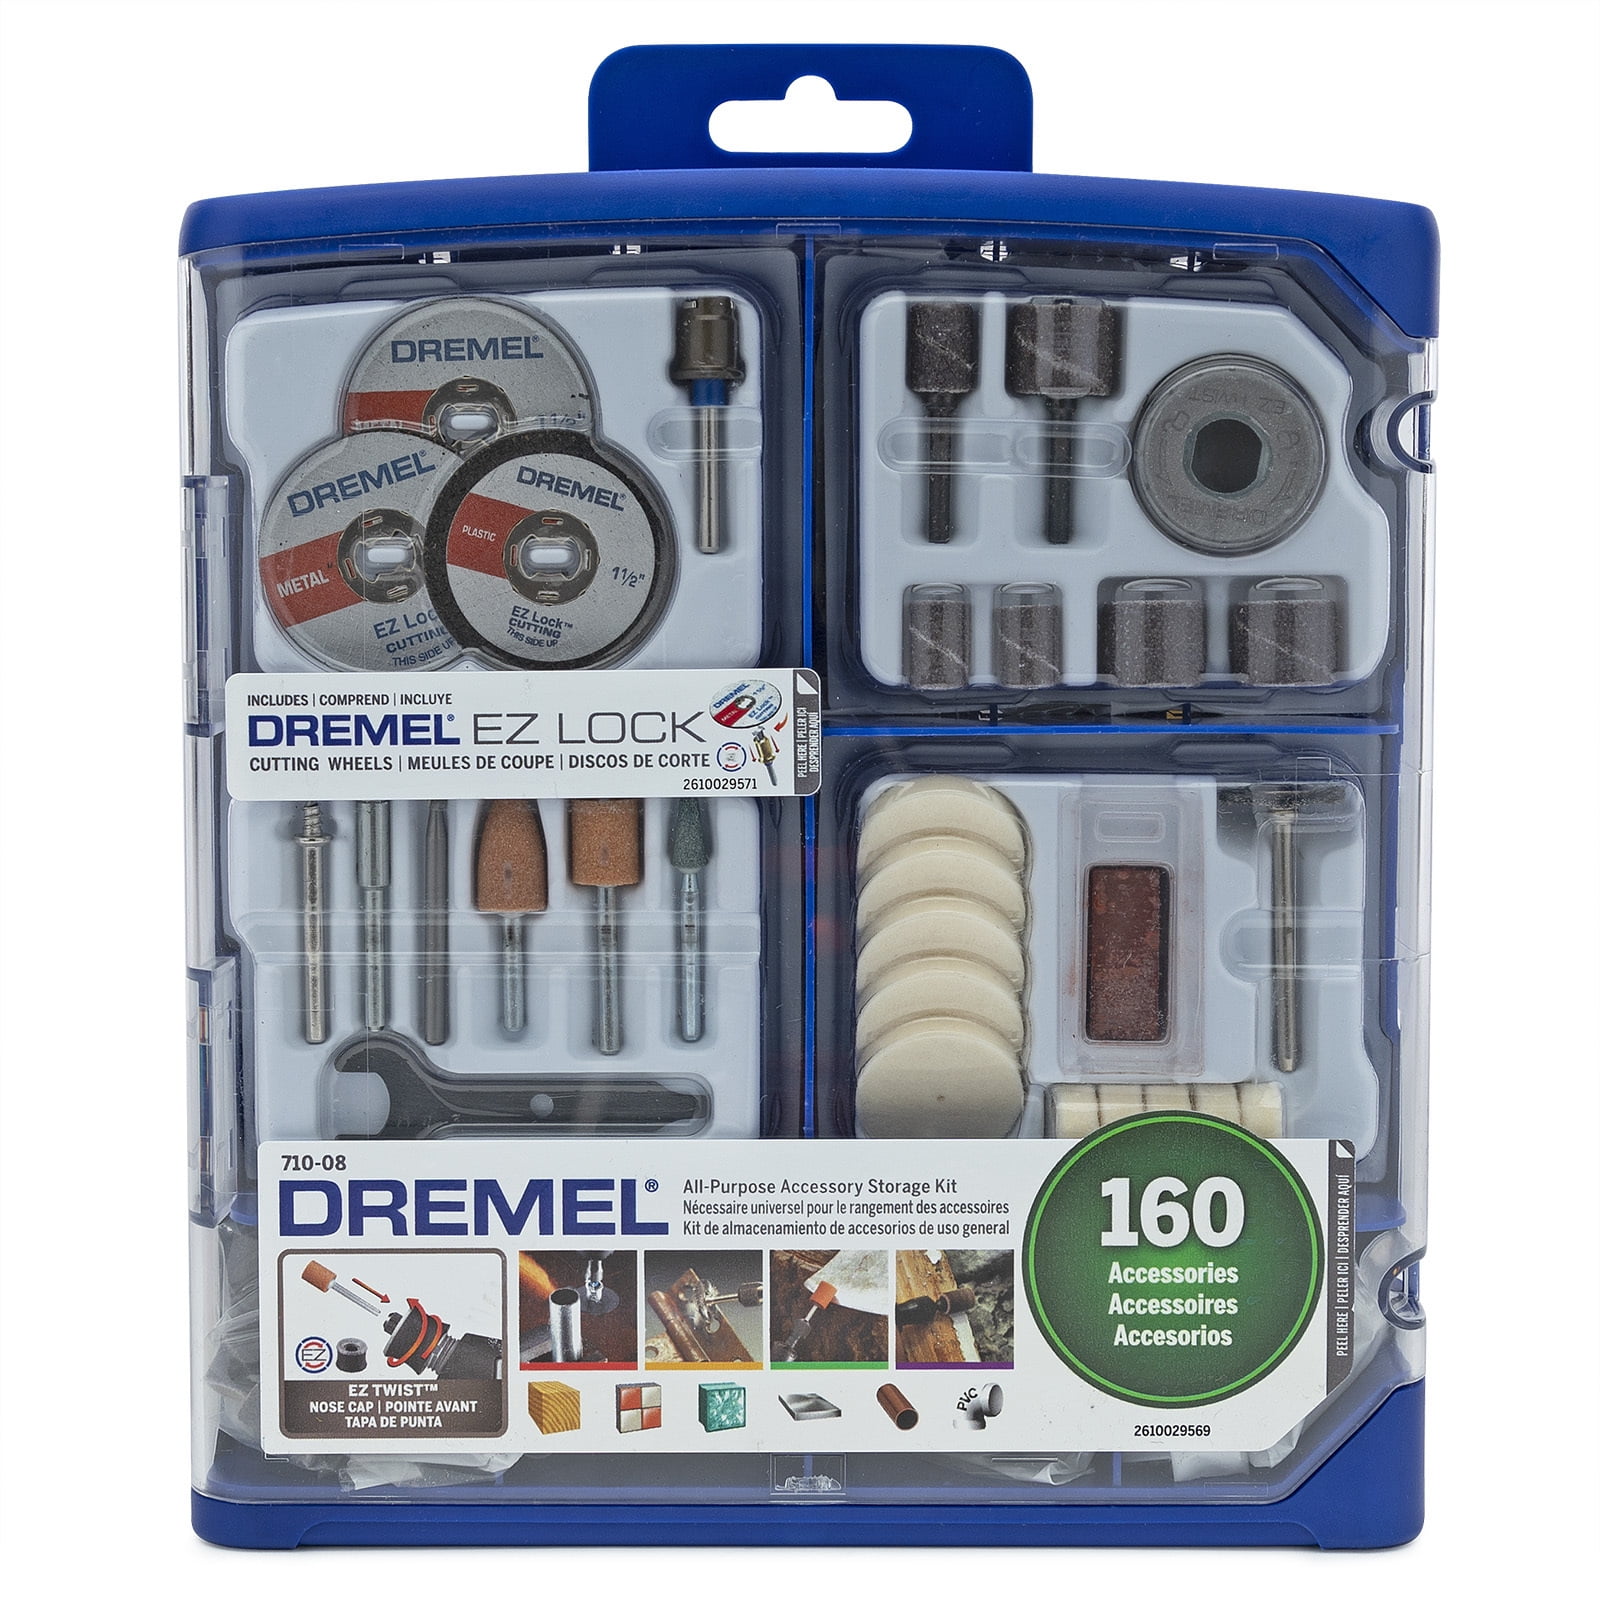 Dremel 8220 Variable Speed Cordless 12-volt Multipurpose Rotary Tool Kit at